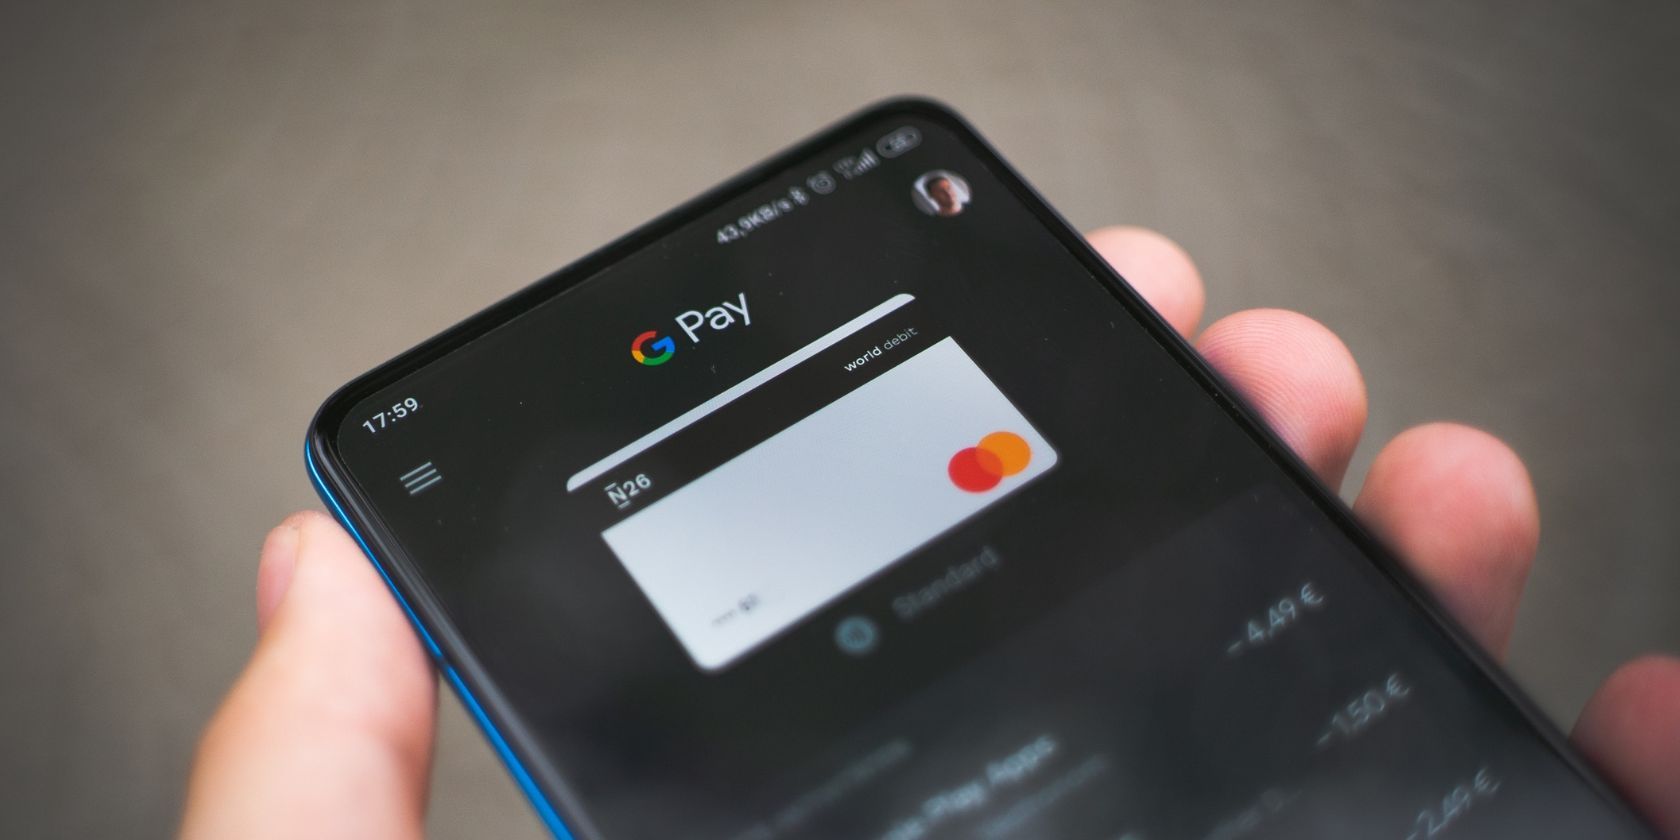 google pay app open on smartphone